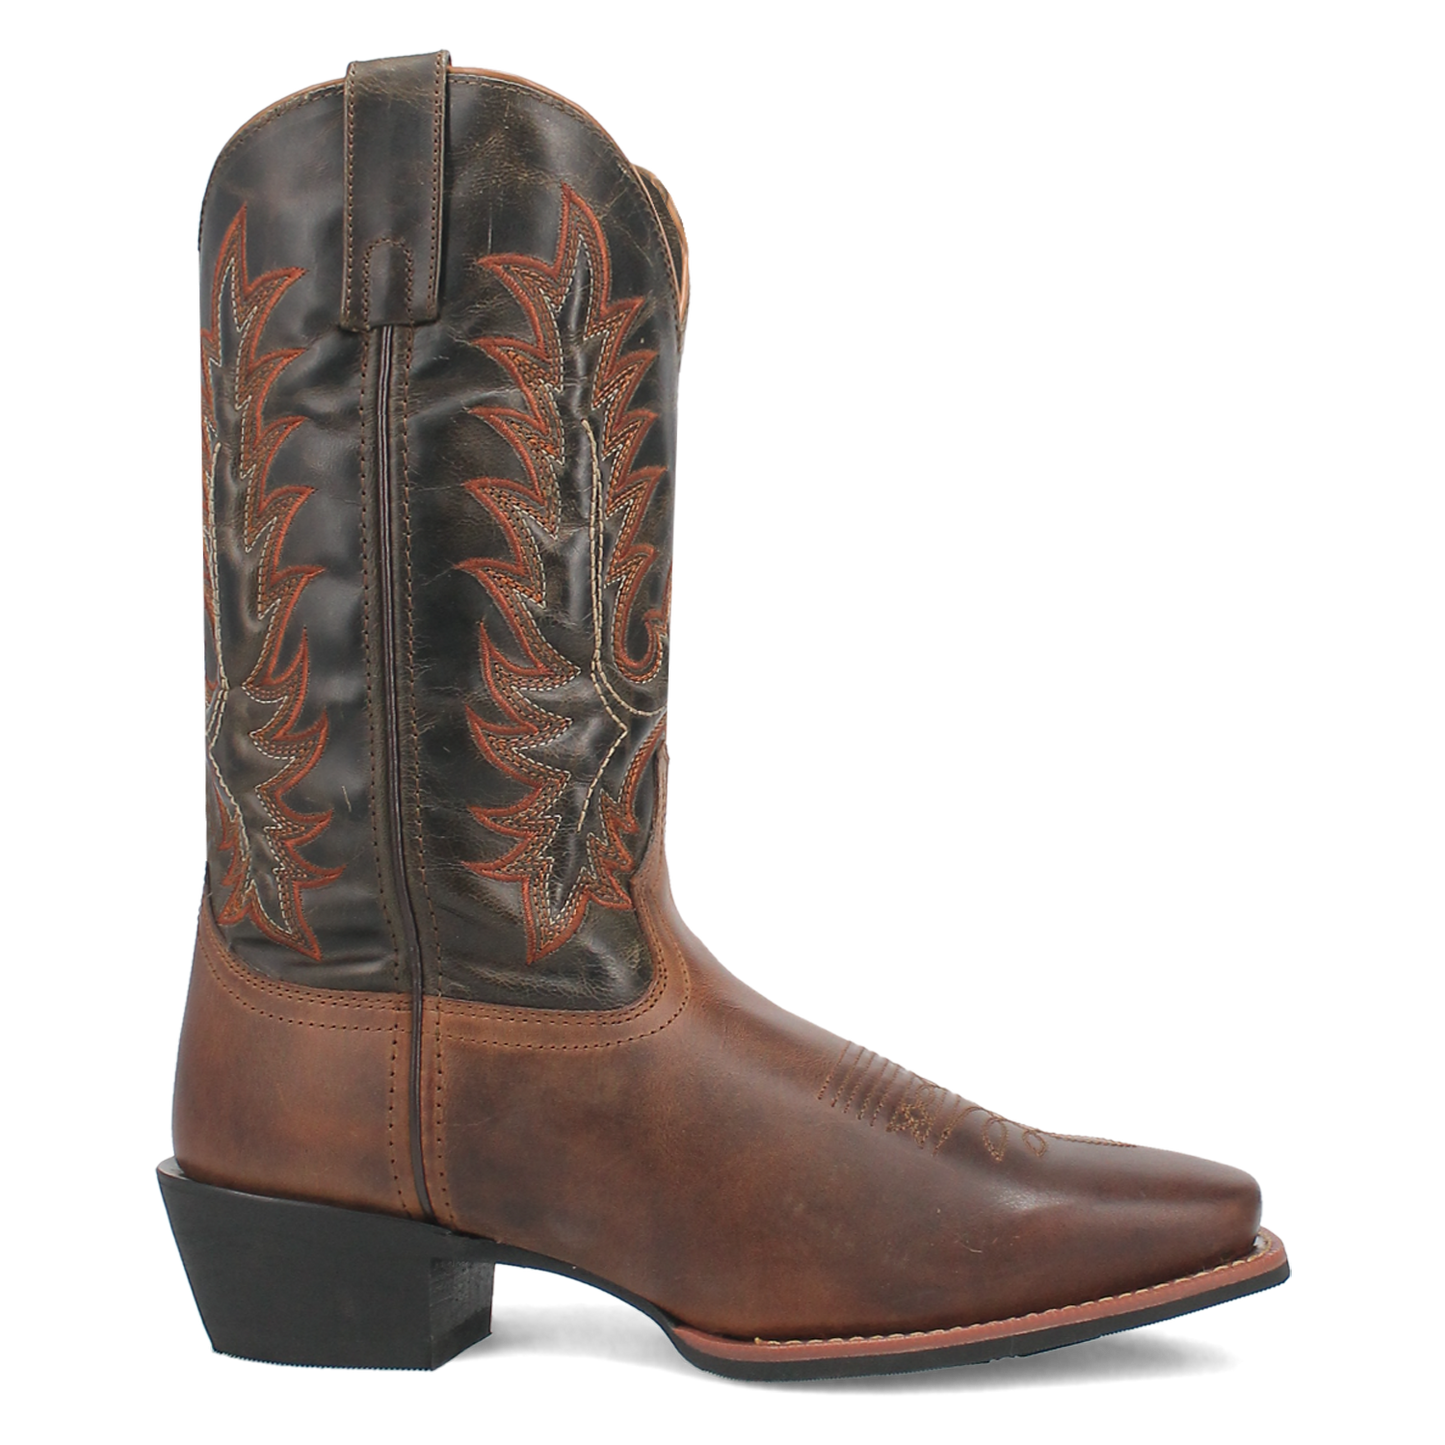 Laredo Men's Kent Square Toe Rust Brown & Black Western Boots 68370